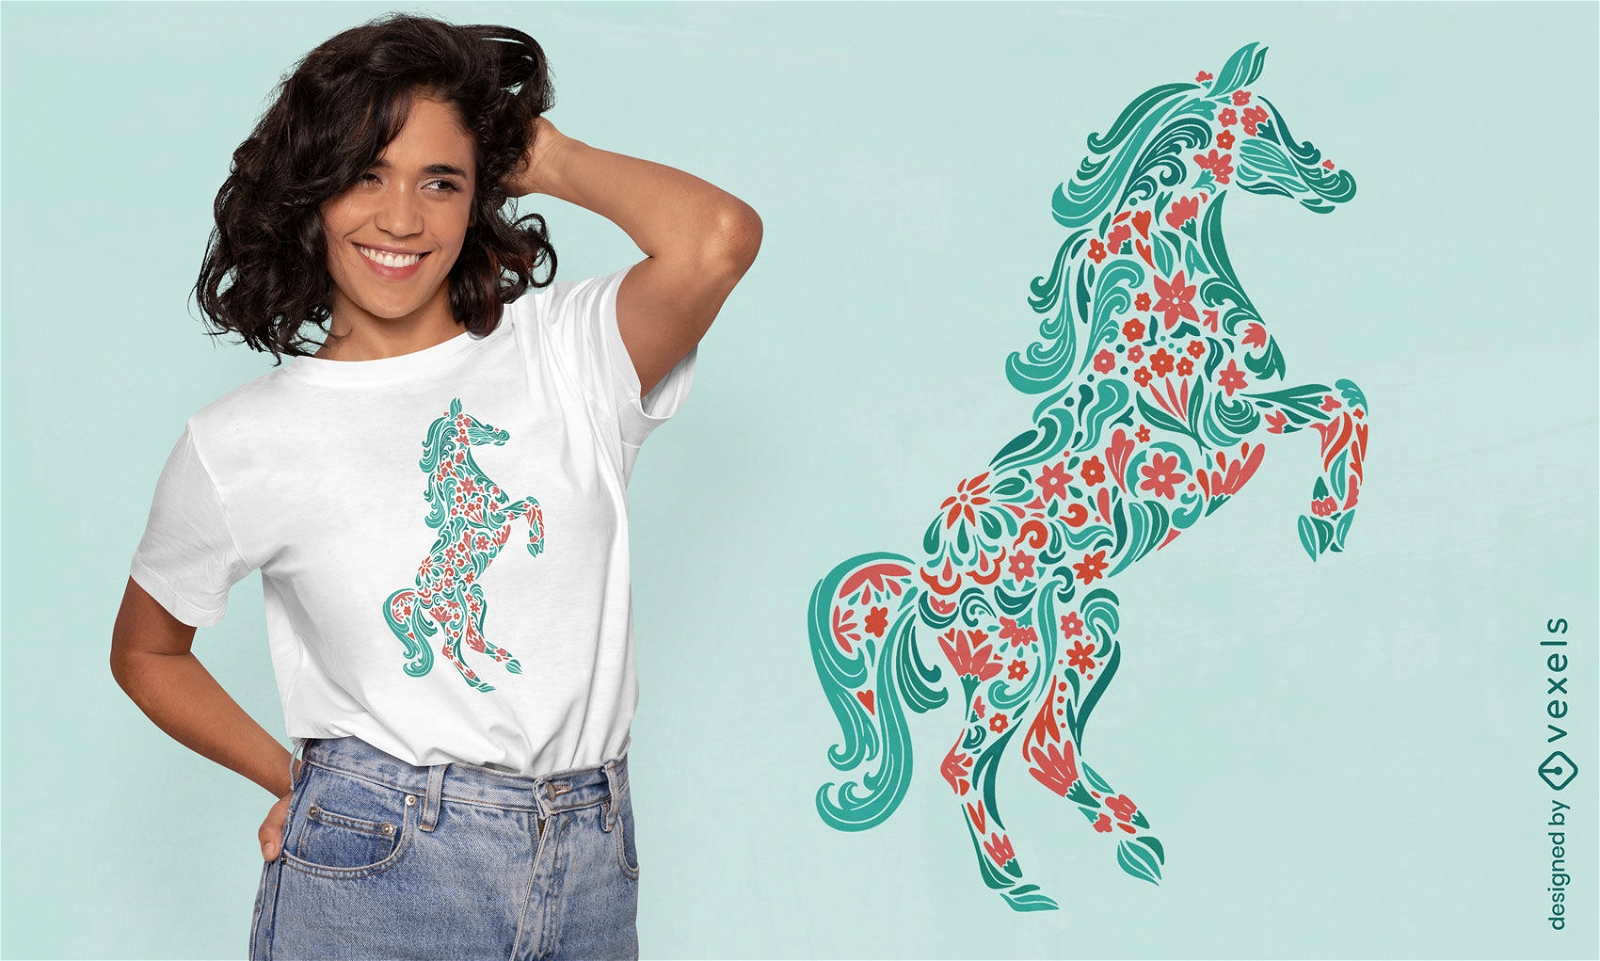 Horse animal made of flowers t-shirt design